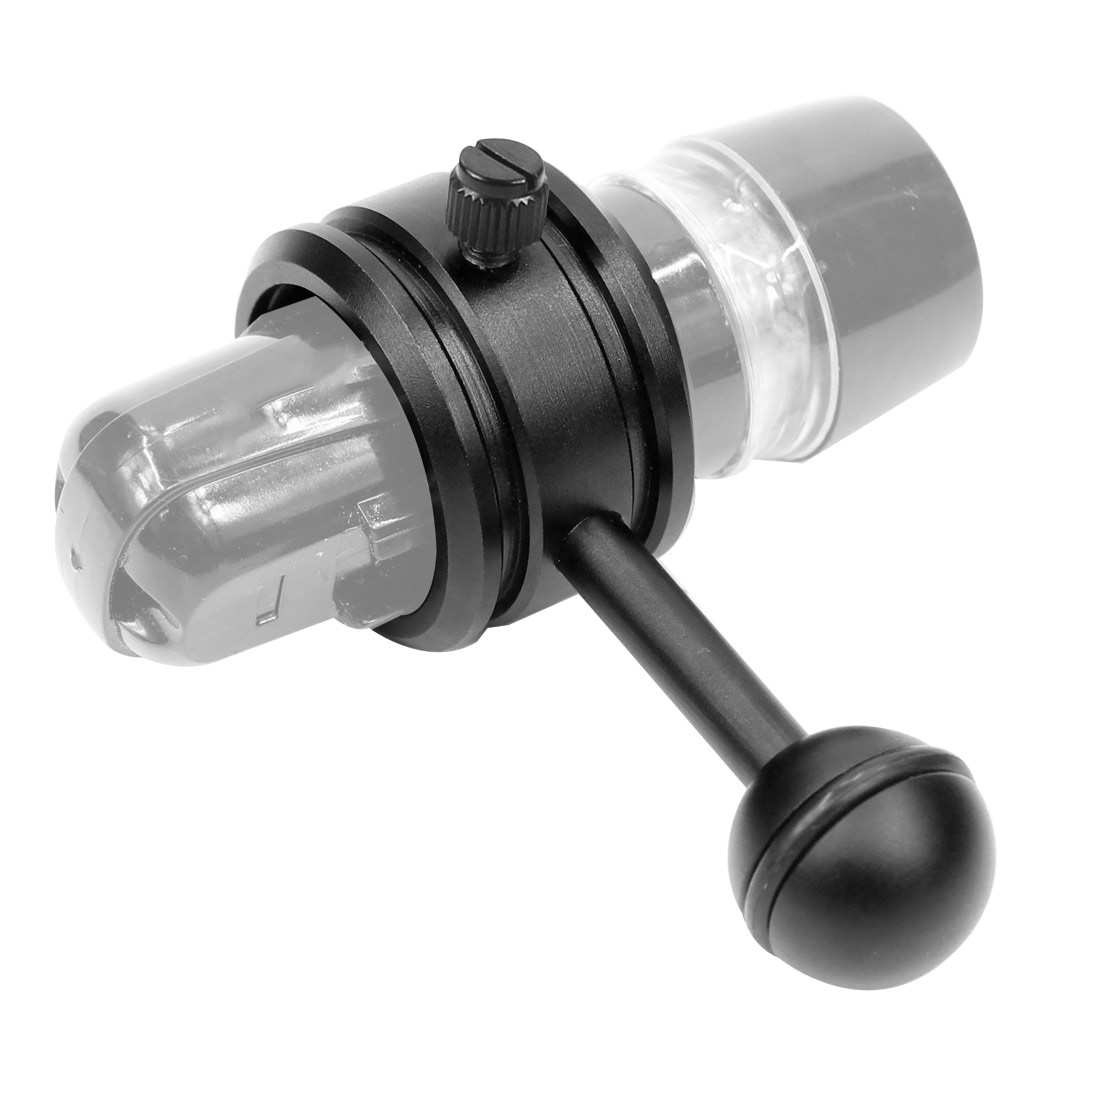 Diving Flashlight Mount Holder Bracket Strobe Arm Adapter Ball Mount for Underwater Photography for Gopro EKEN Action Camera